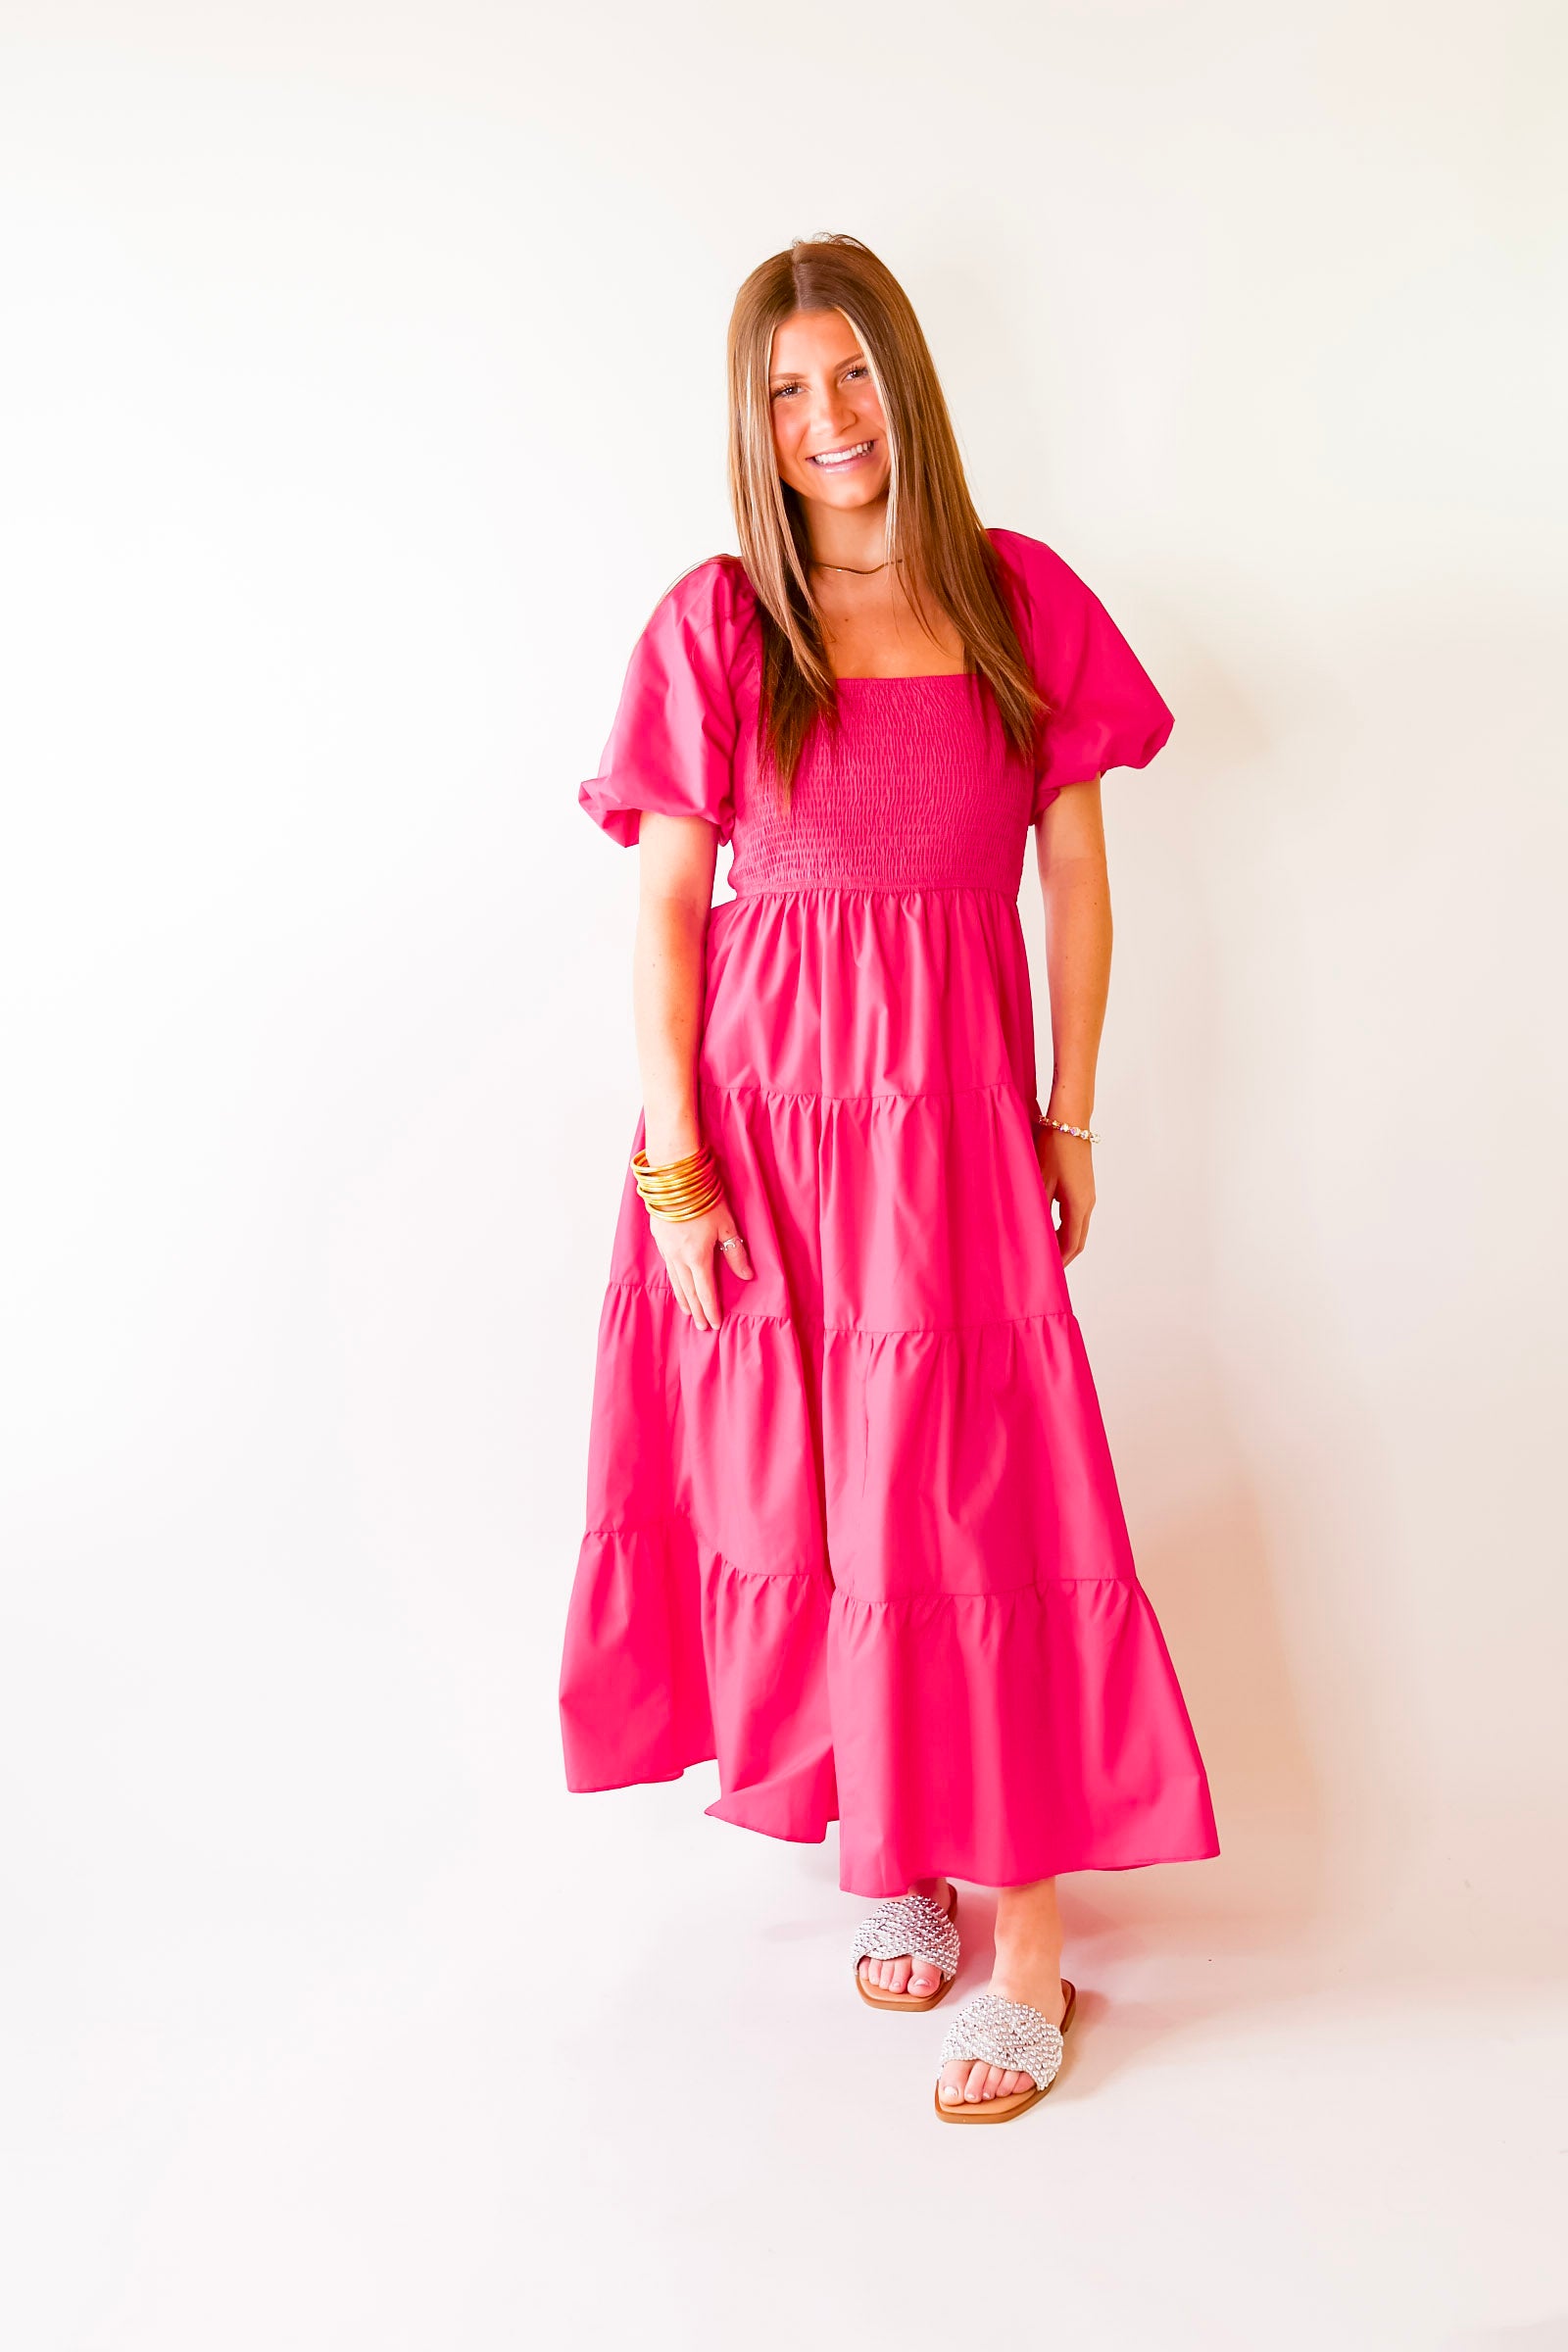 Santorini Sunshine Short Balloon Sleeve Maxi Dress in Fuschia Pink - Giddy Up Glamour Boutique